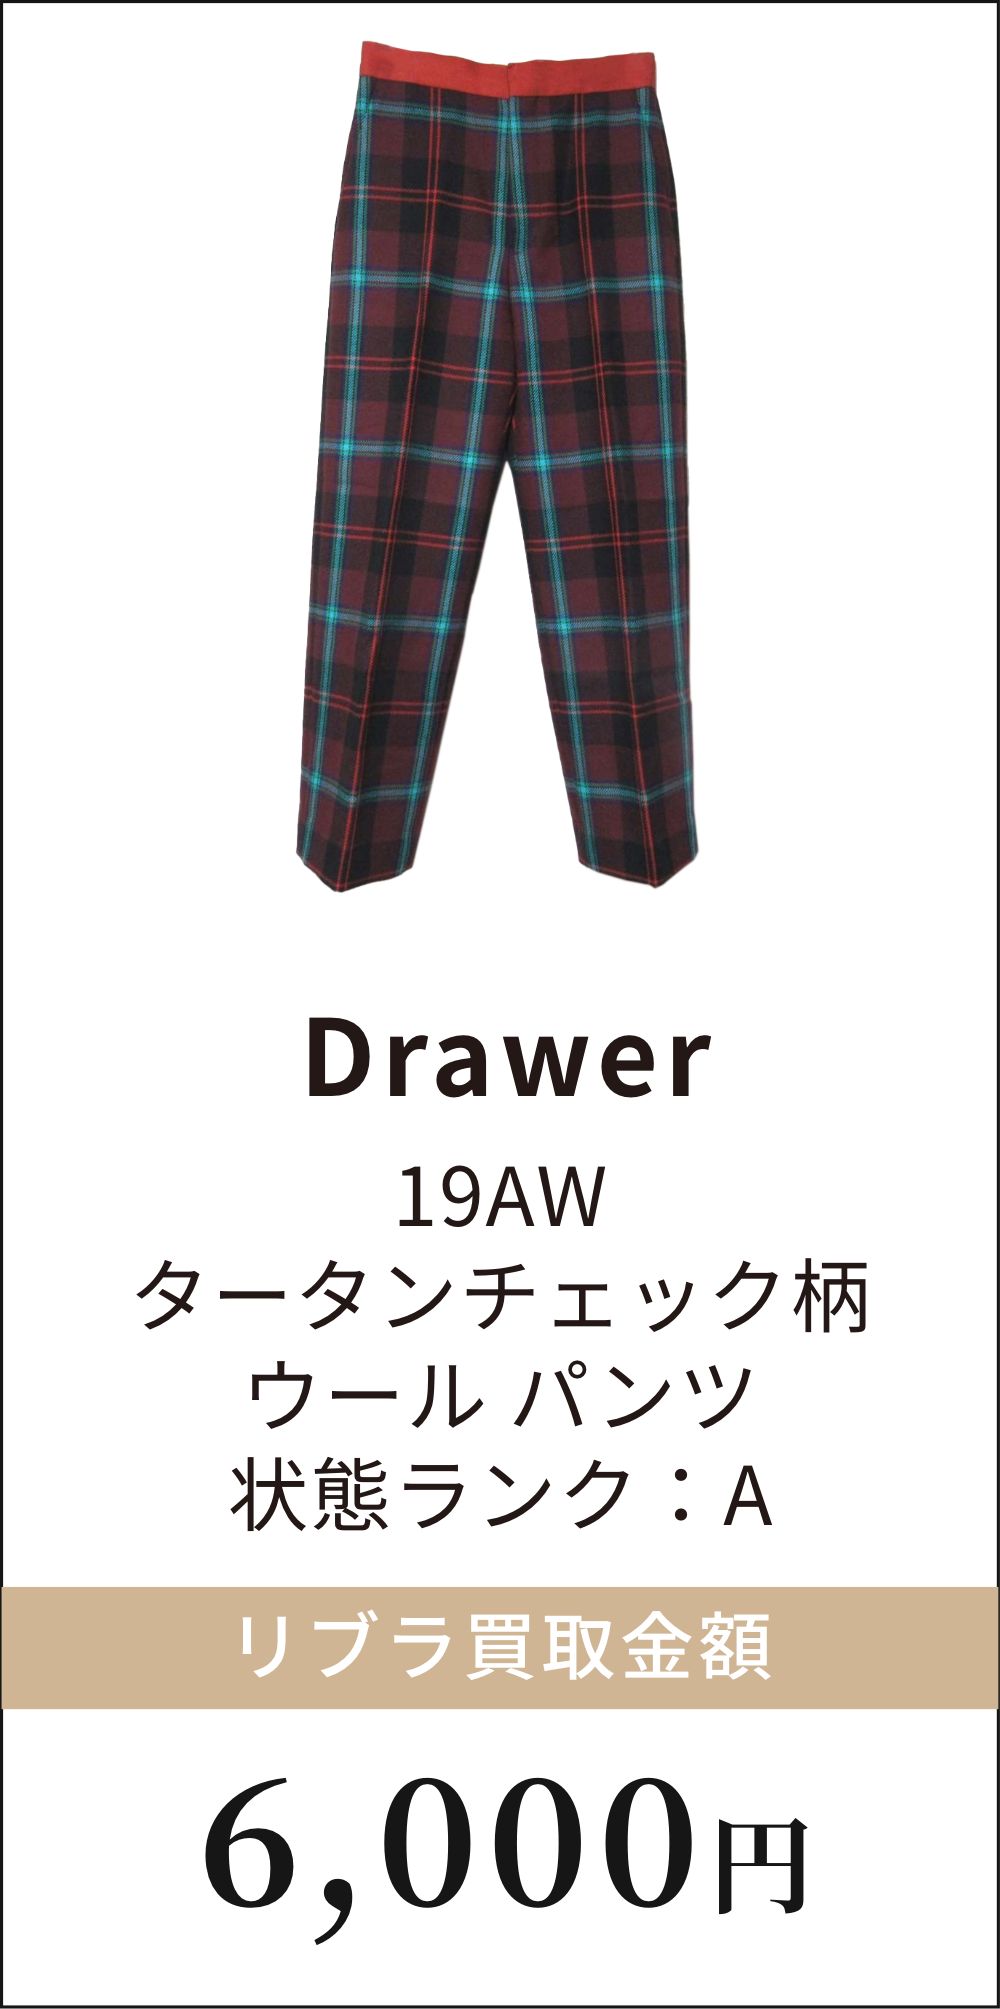 Drawer 19AW タータンチェック柄ウールパンツ